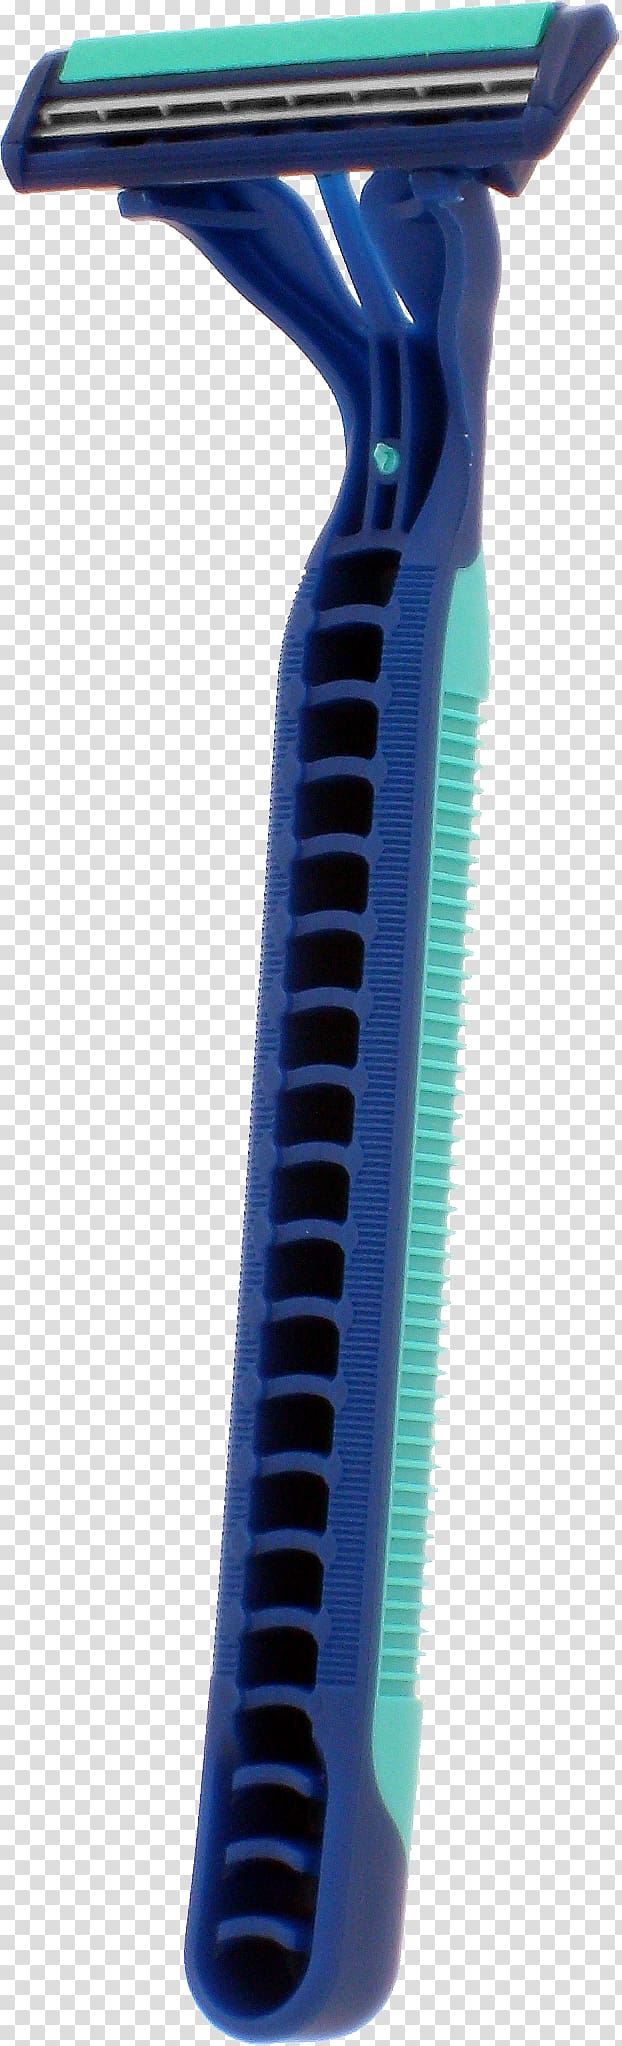 Gillette razor transparent background PNG clipart